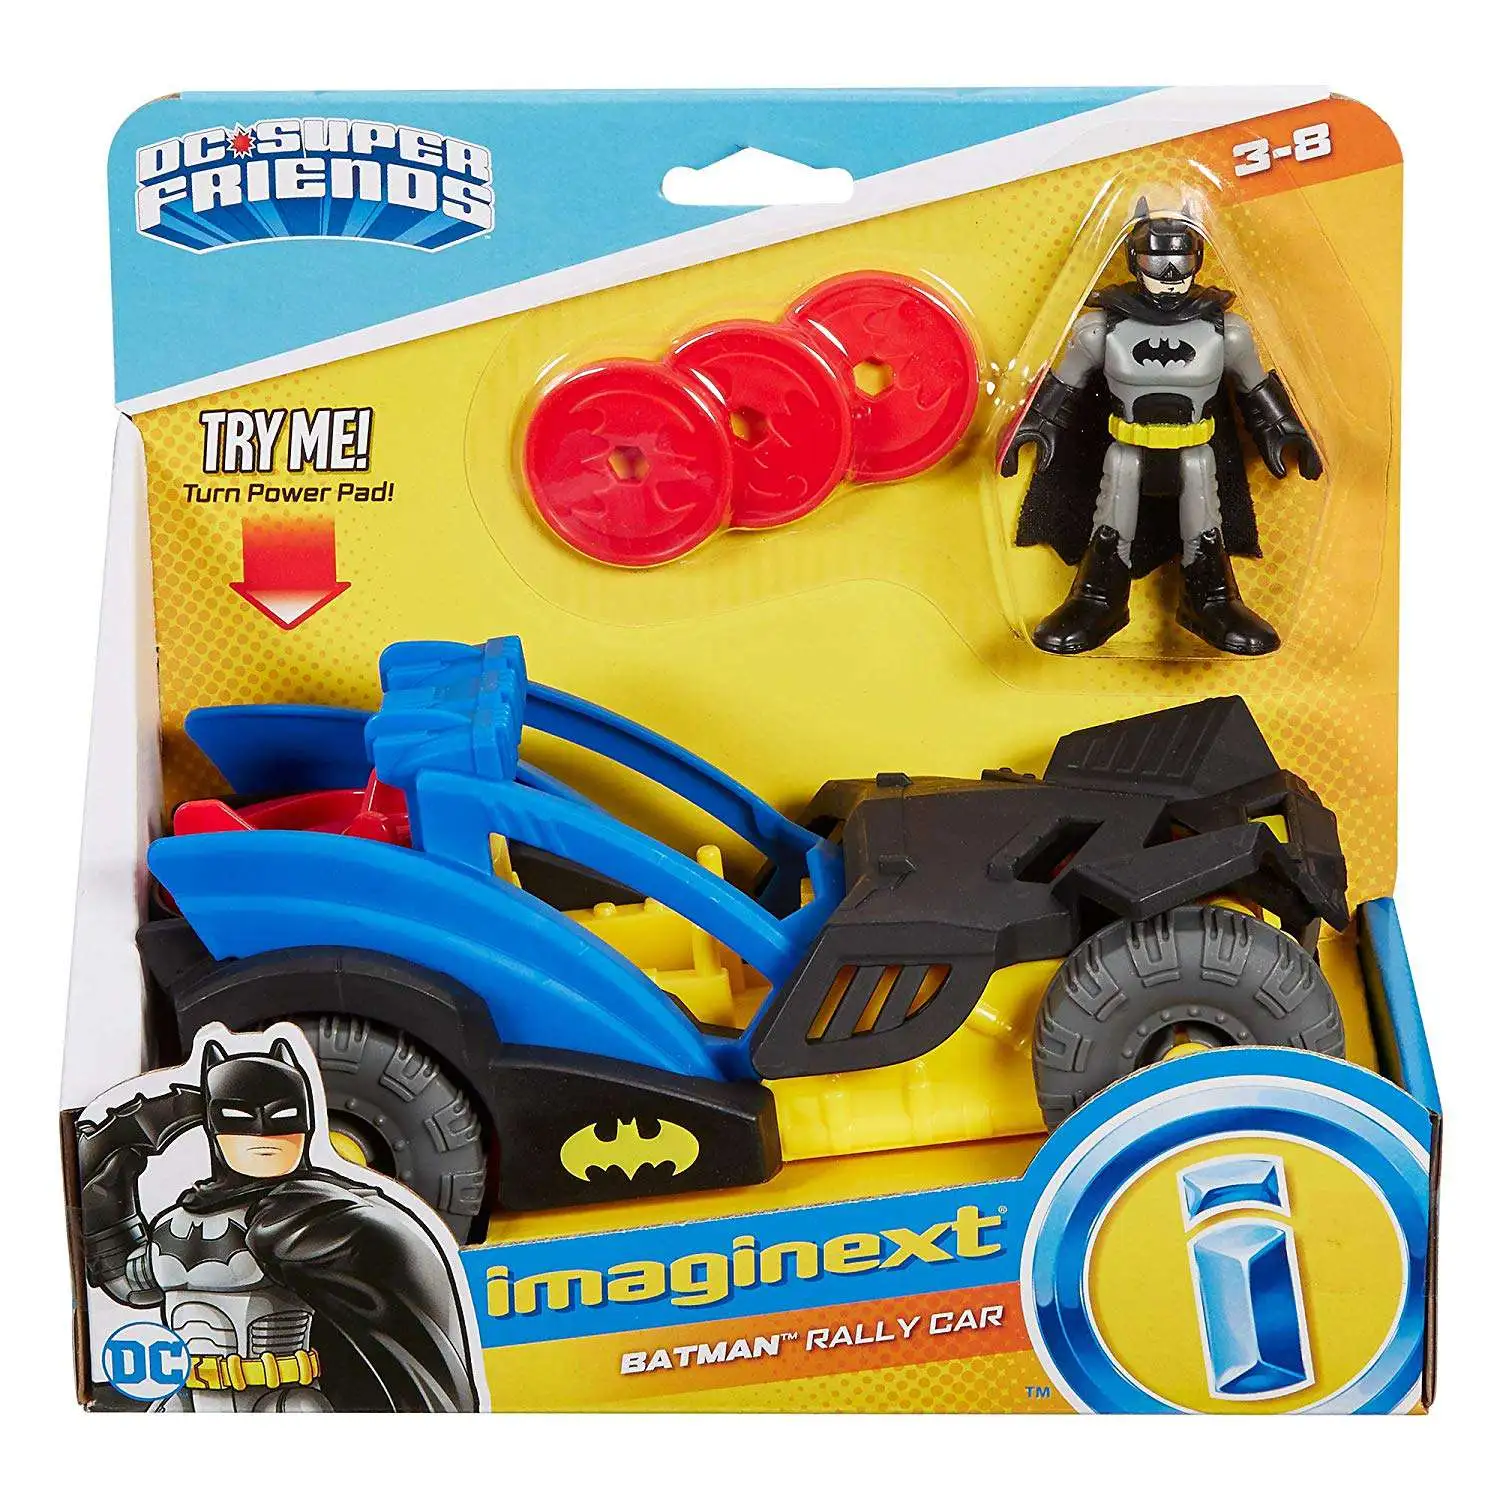 Robin Batman Bane Fisher Price Imaginext Batmobile DC Super Friends Set 